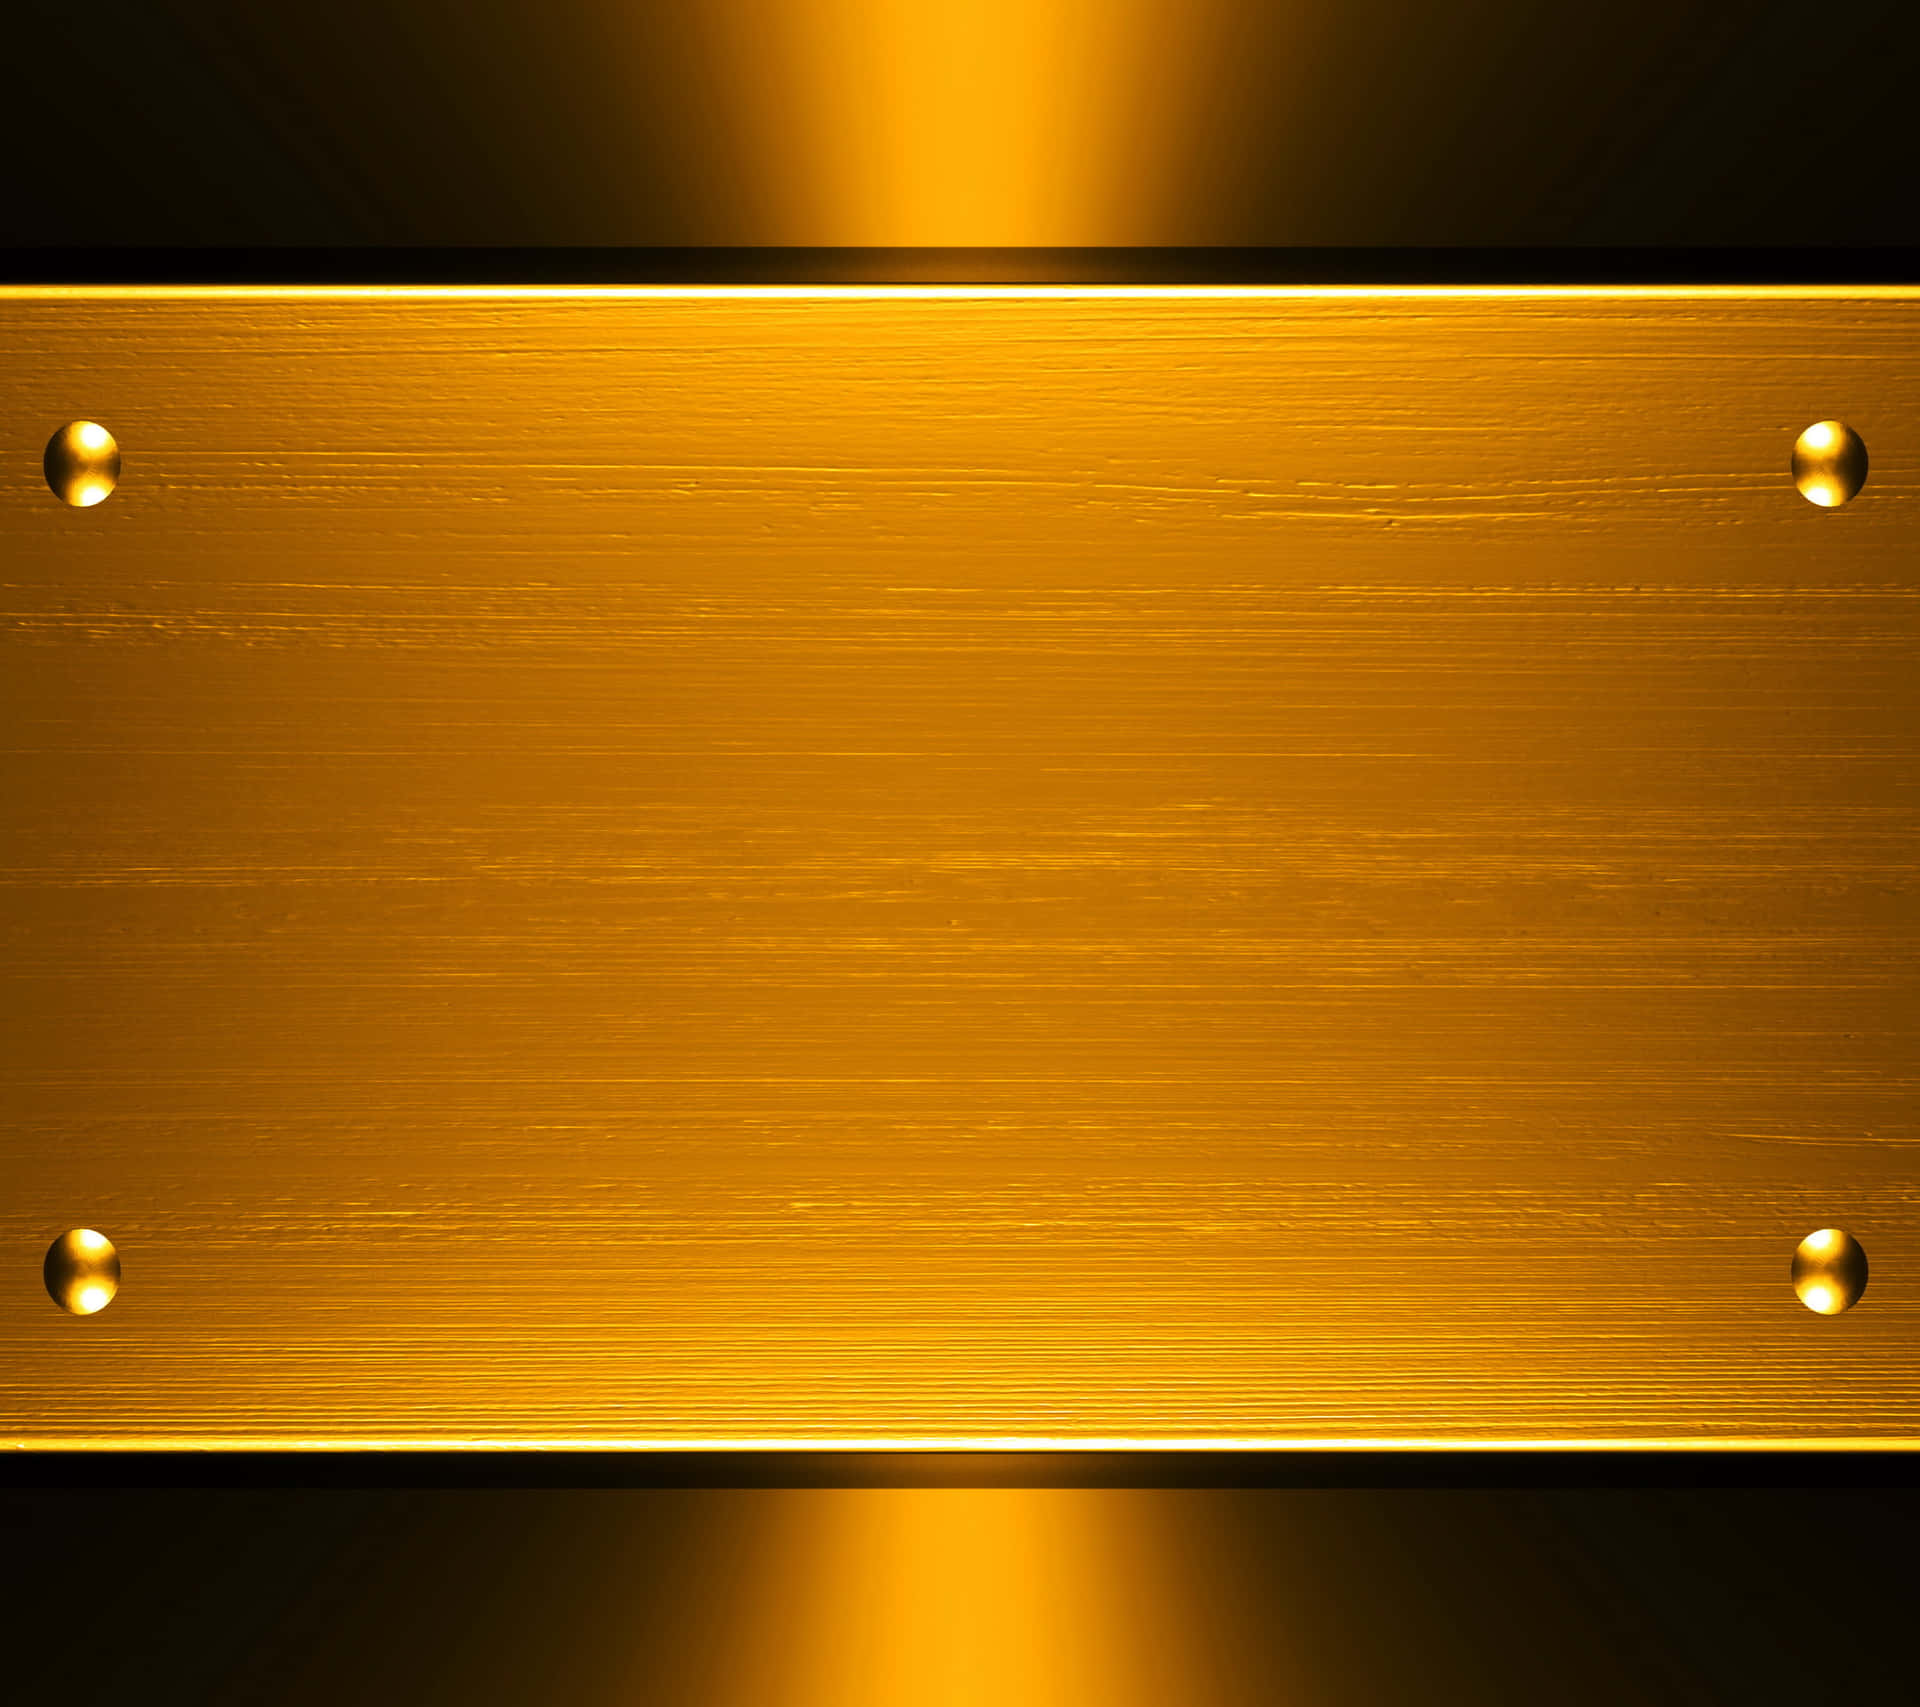 Shiny Golden Steel Plate Background